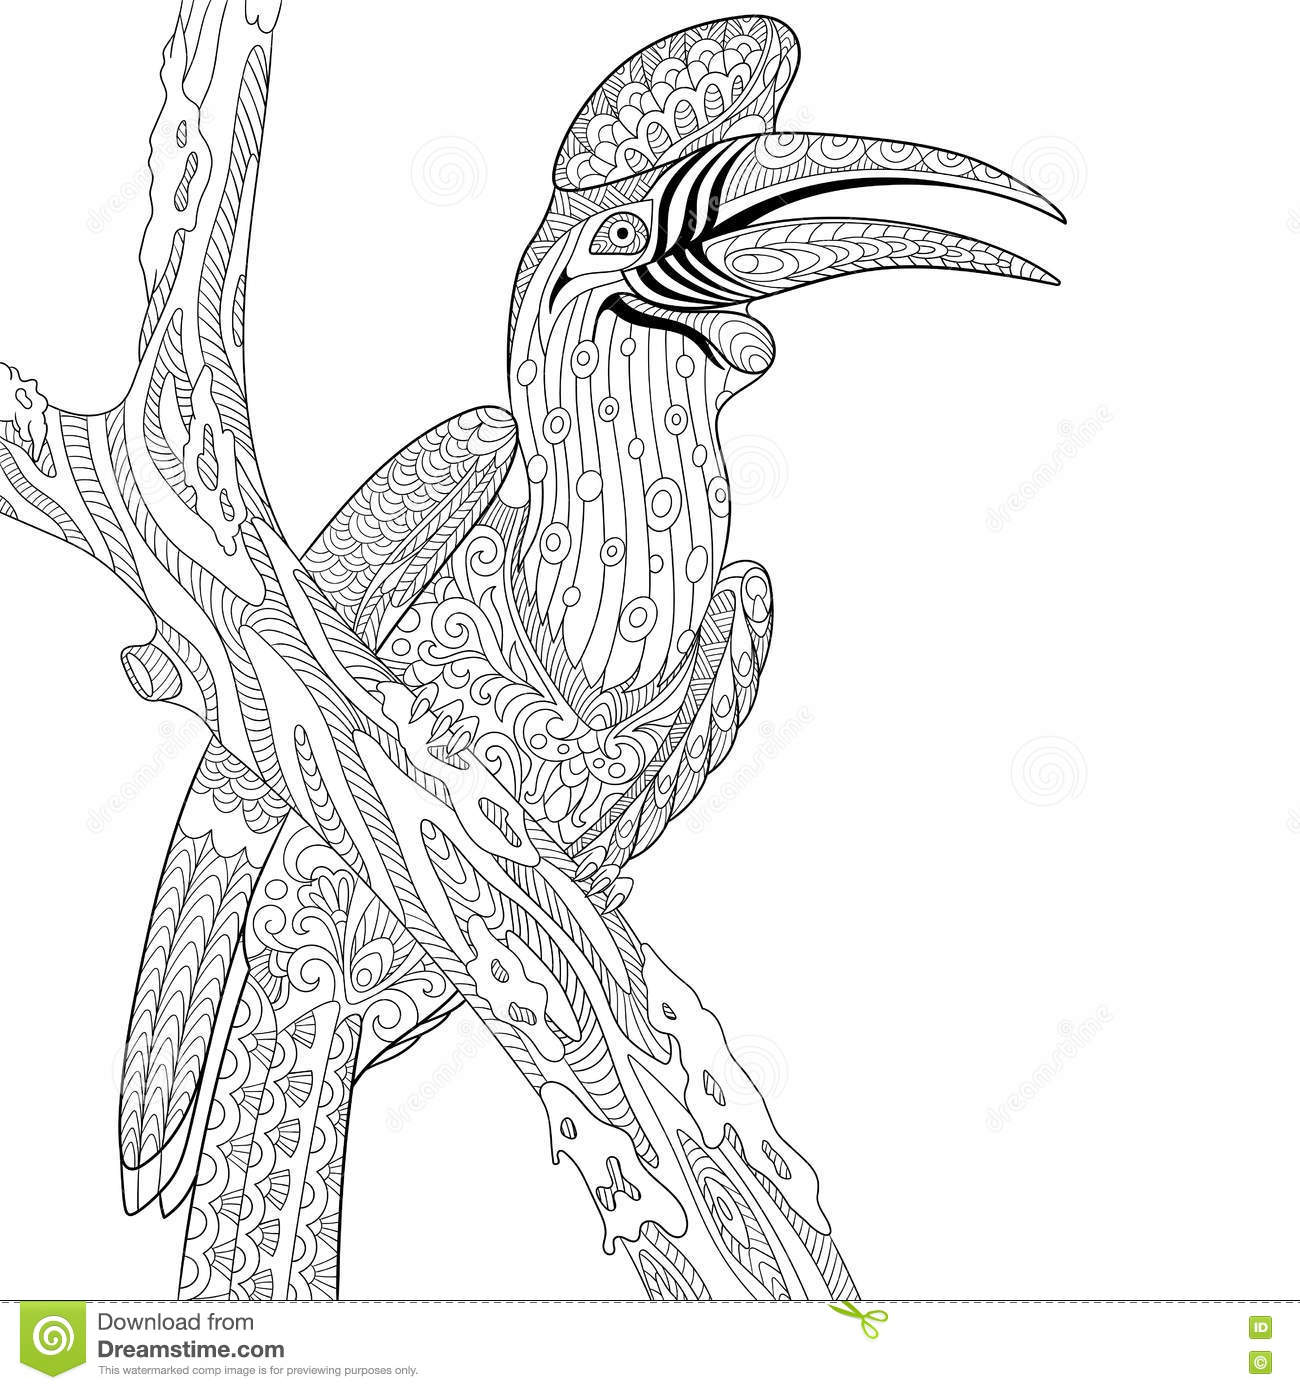 Rhinoceros Hornbill coloring #15, Download drawings